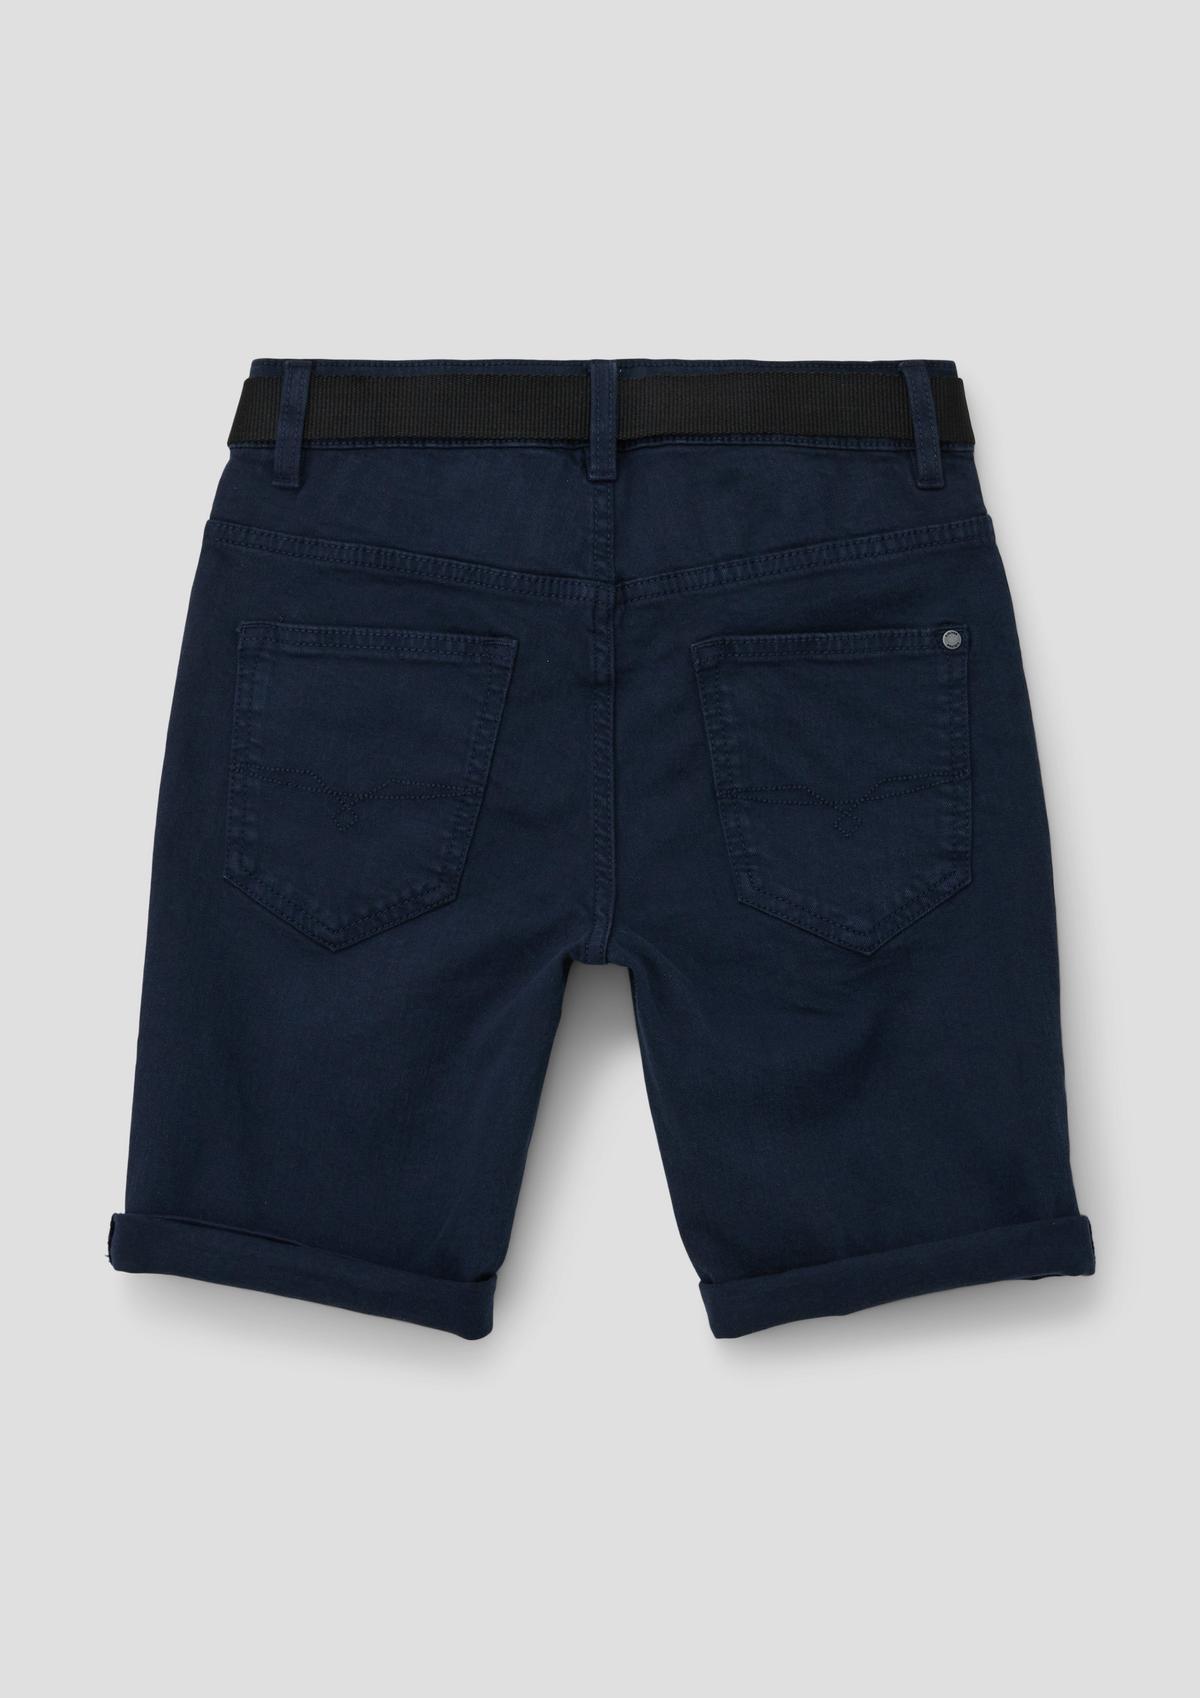 s.Oliver Seattle jeans / regular fit / mid rise / slim leg